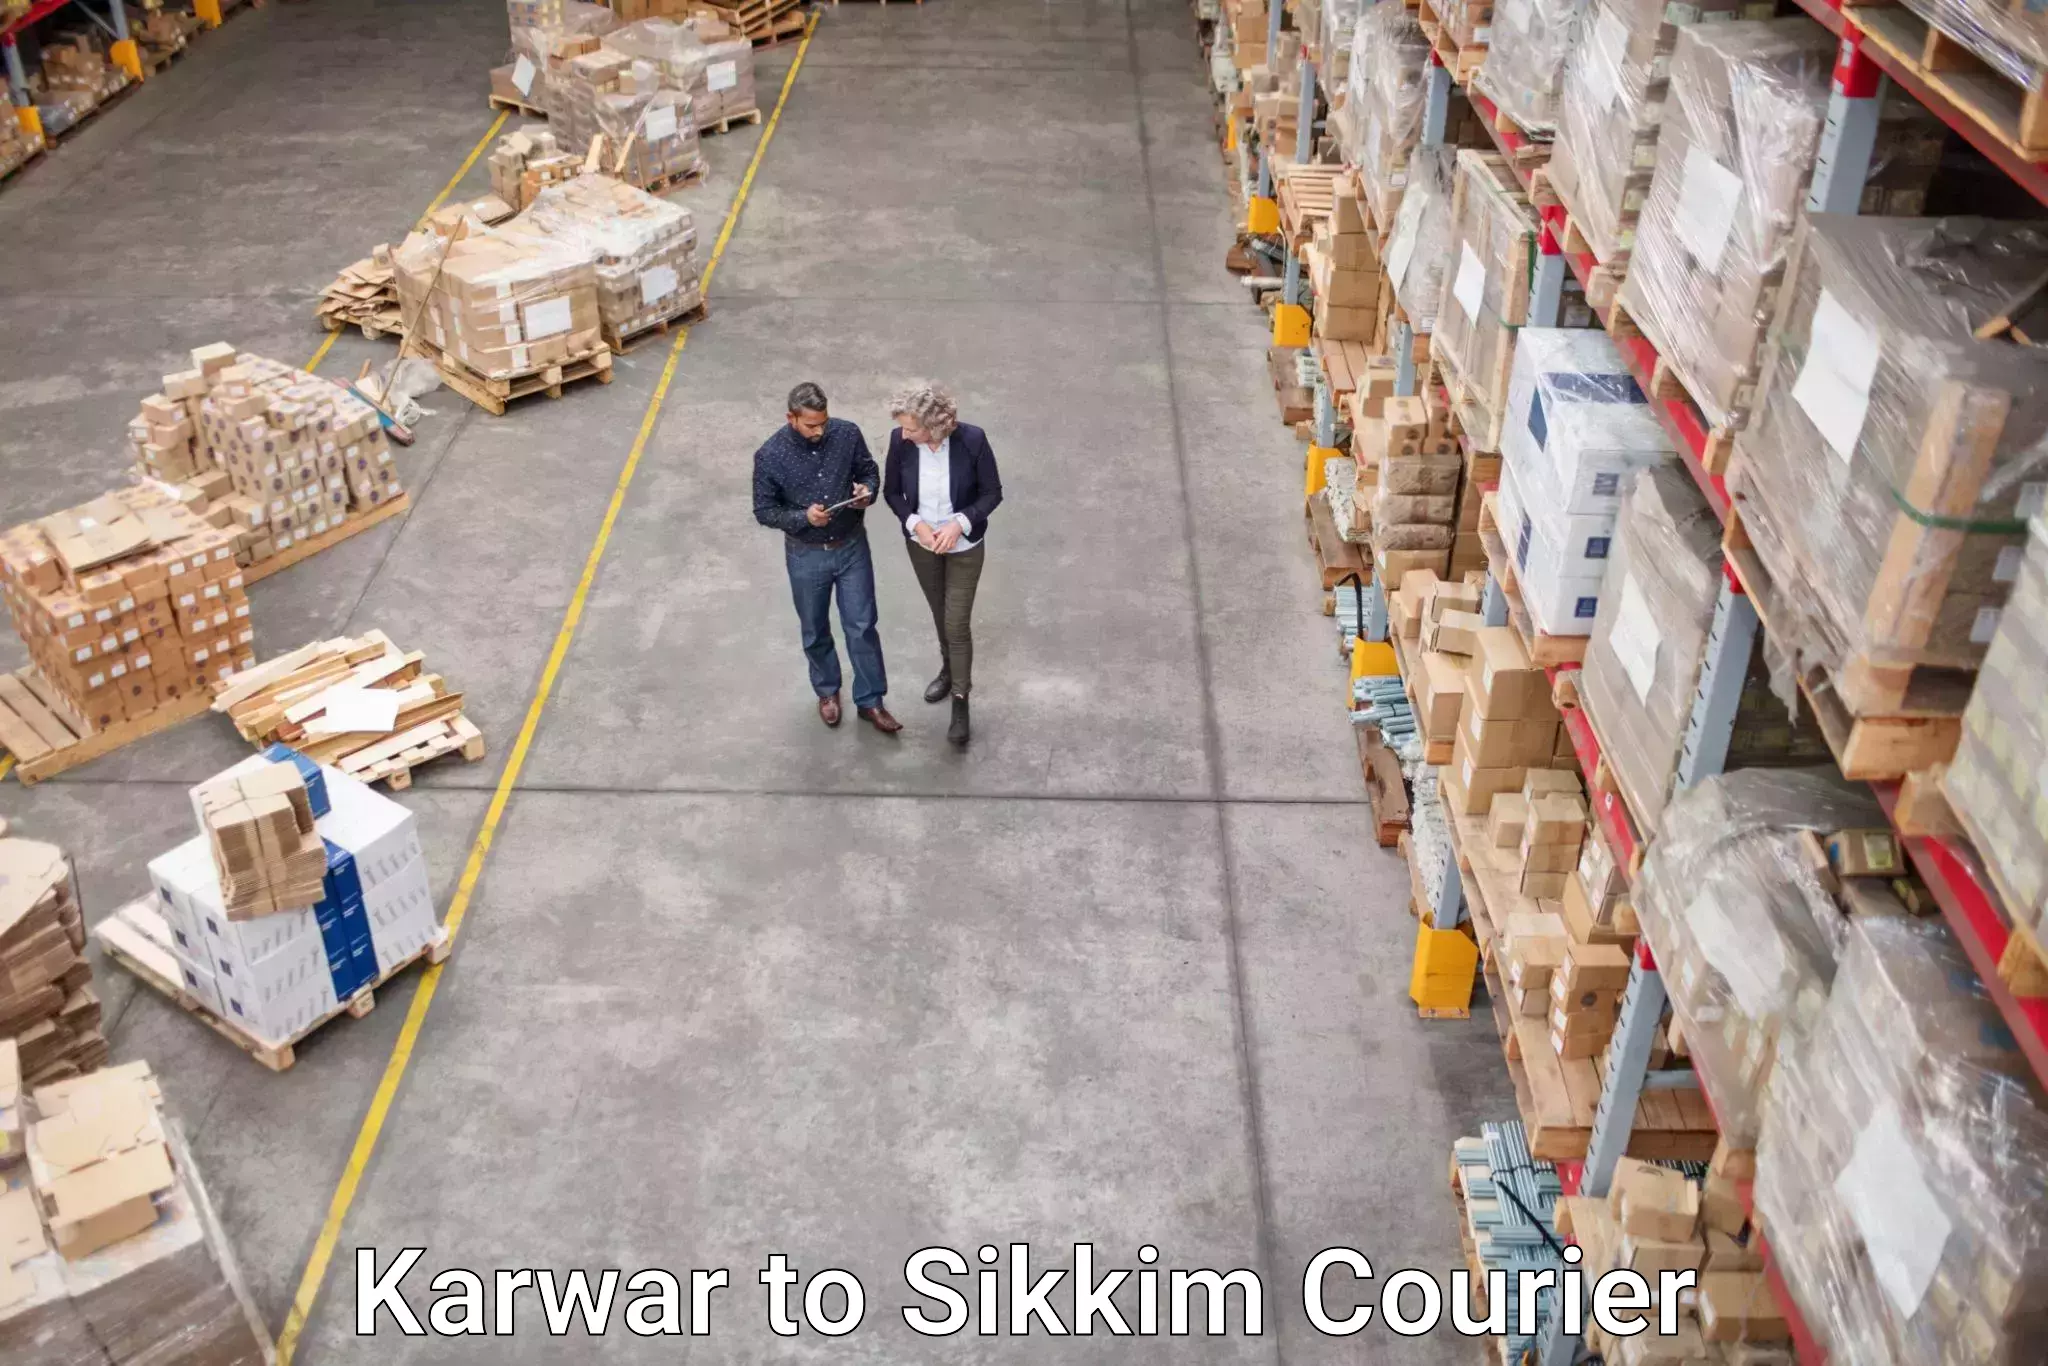 Bulk courier orders Karwar to Mangan